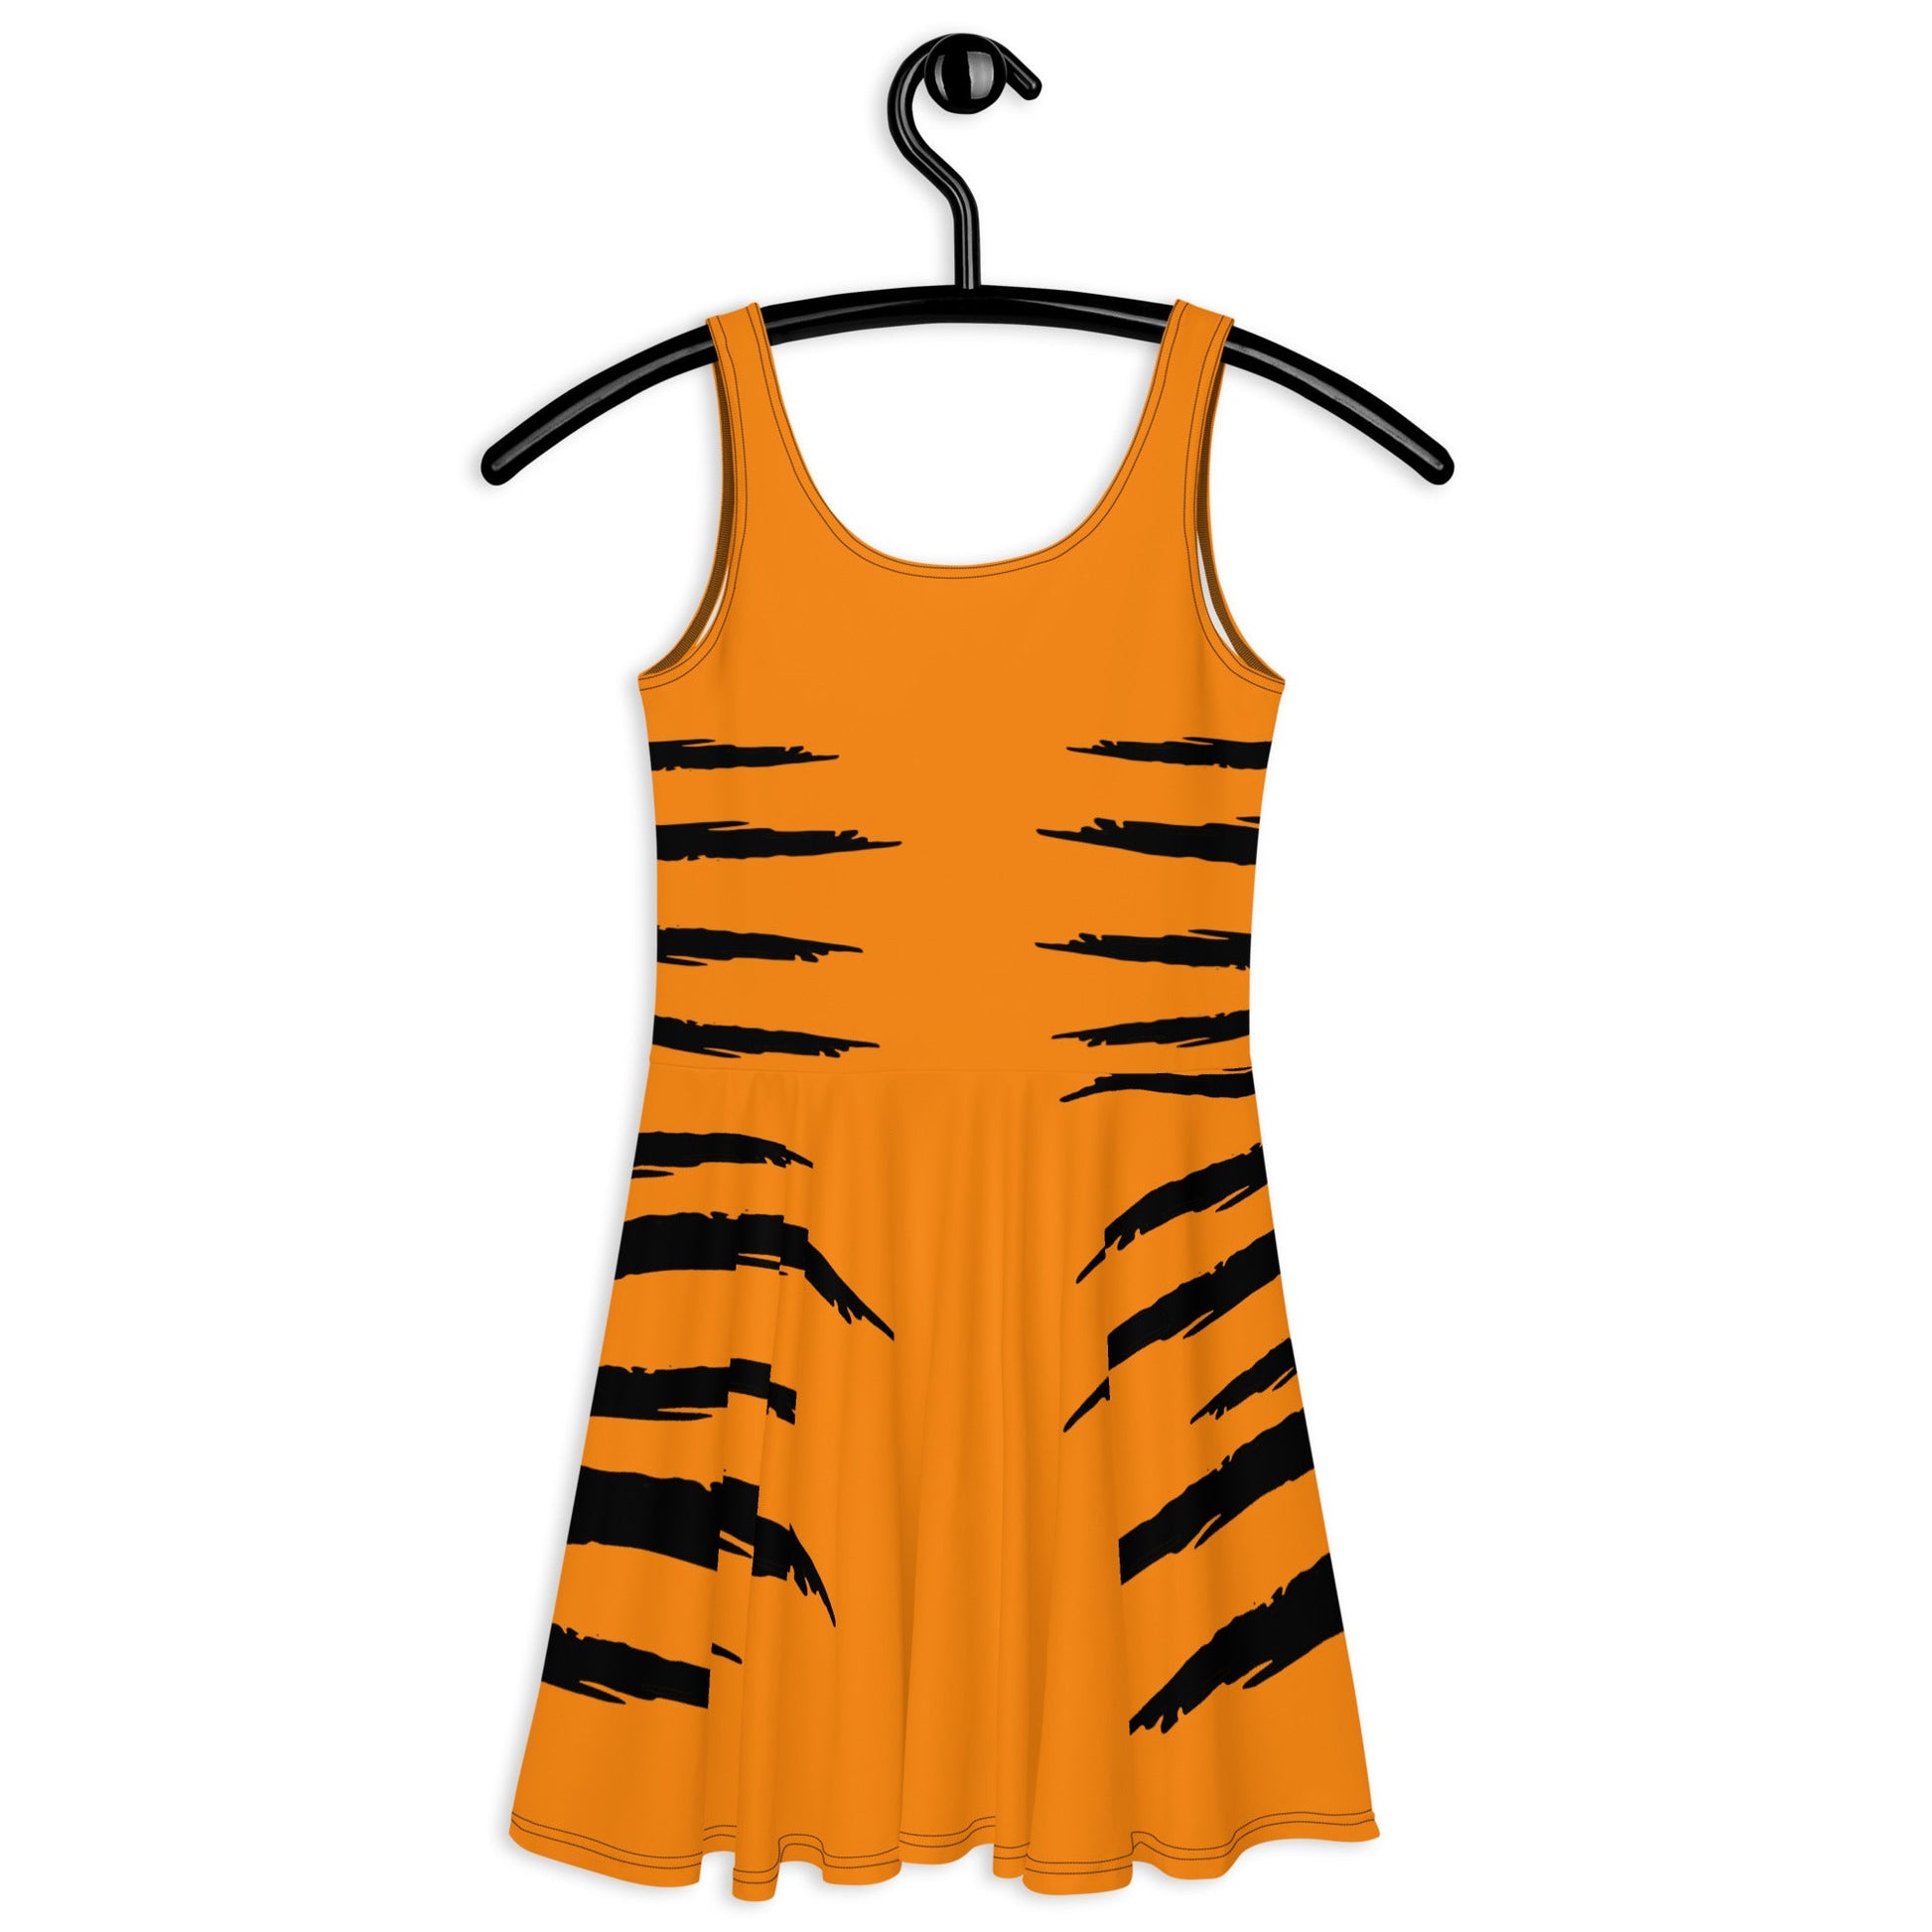 The Tigger Skater Dress 100 acre woodschristopher robinSkater DressWrong Lever Clothing